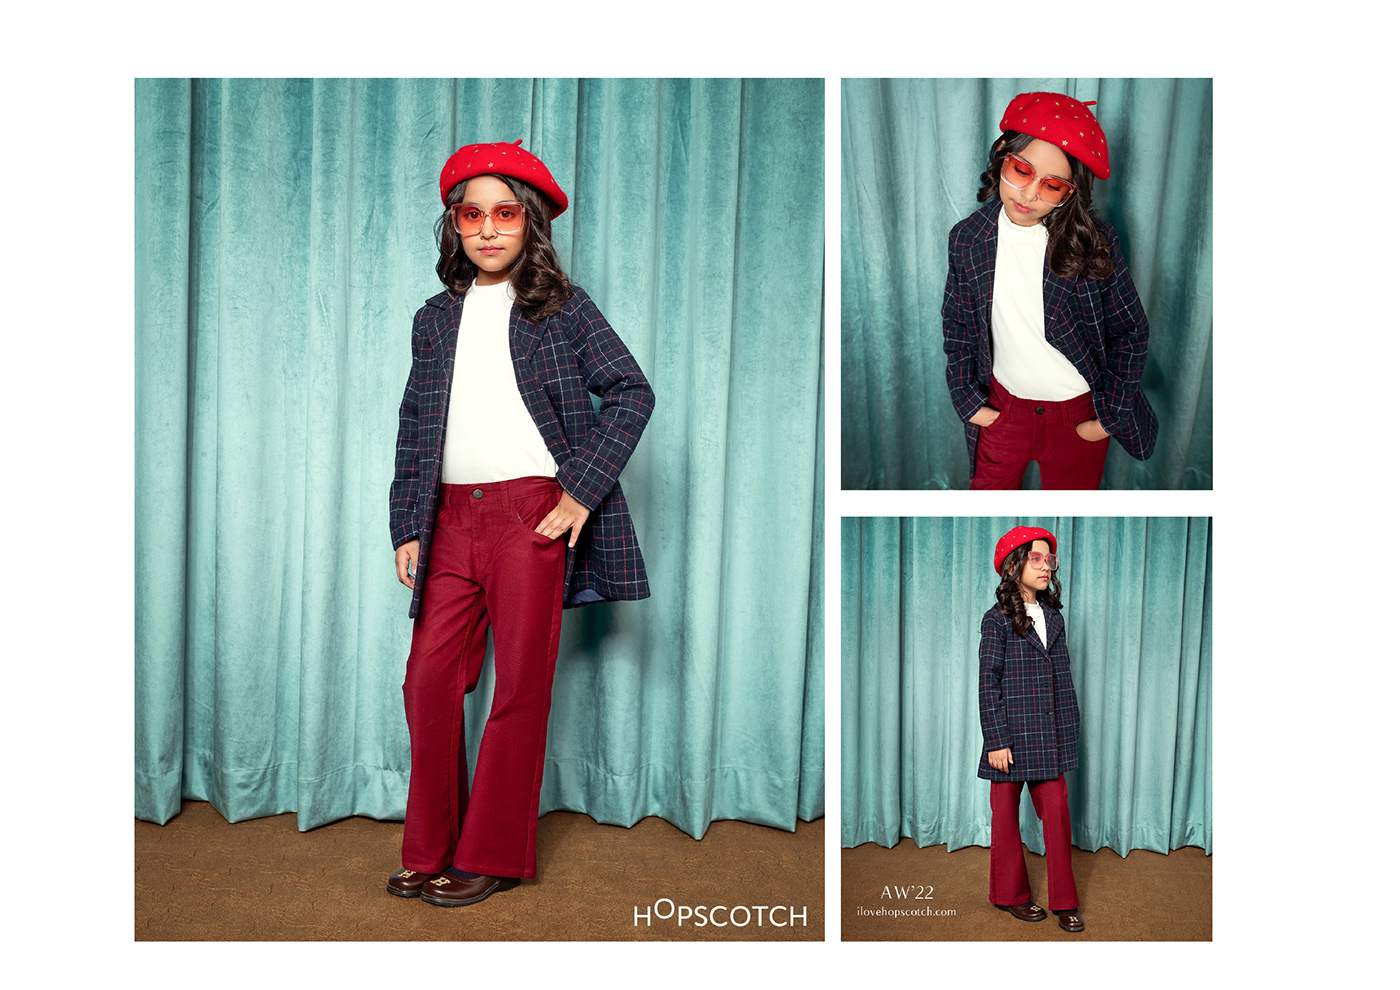 Fashion  Children wear  kids fashion kidswear Clothing apparel kidswear design girlswear Childrenswear